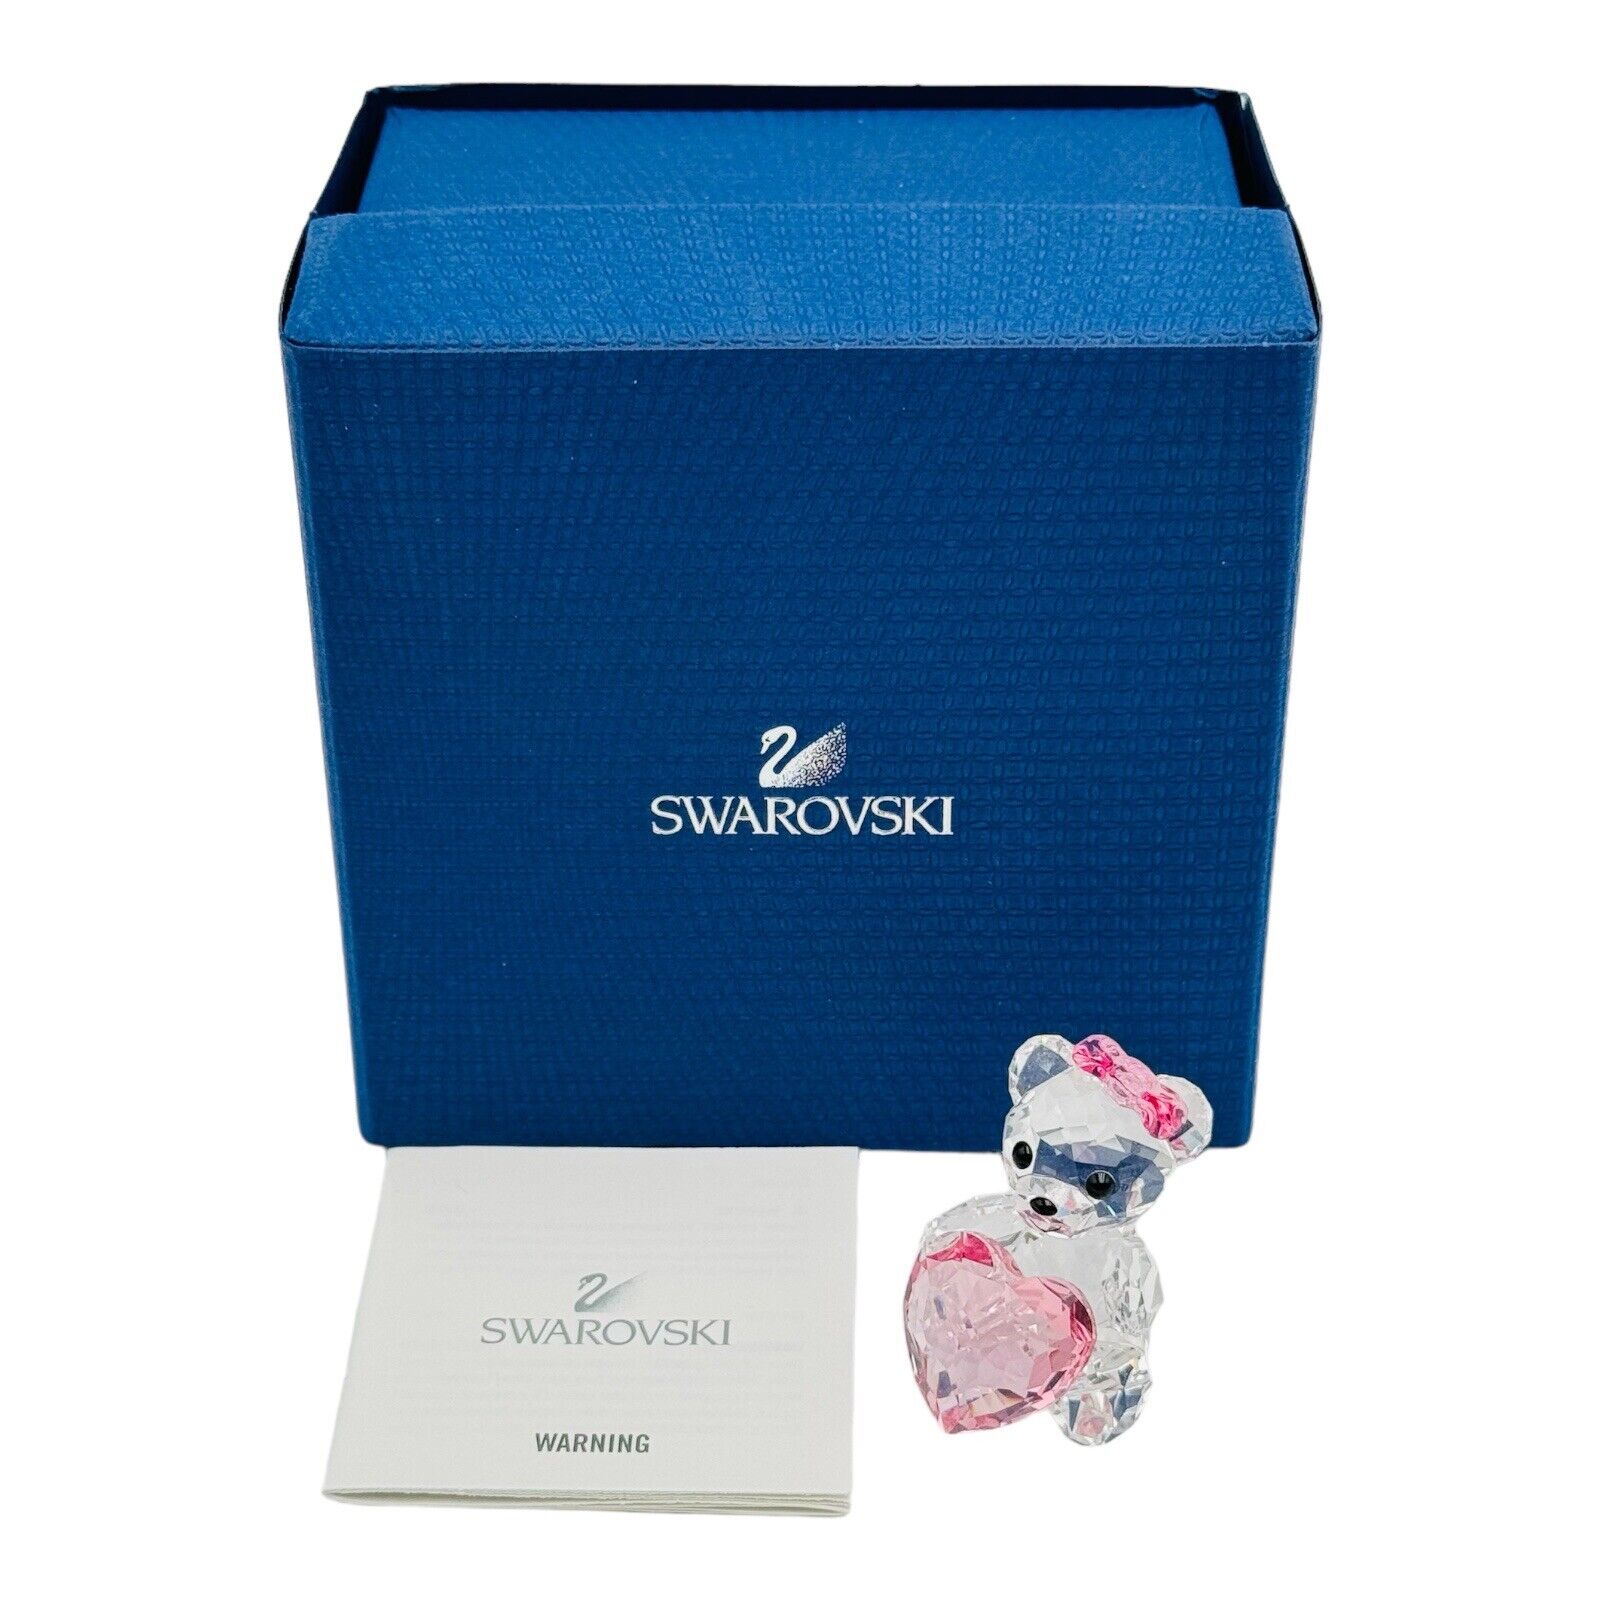 Swarovski Crystal Only For You Kris Bear Figurine Teddy Heart #1096732 IN BOX